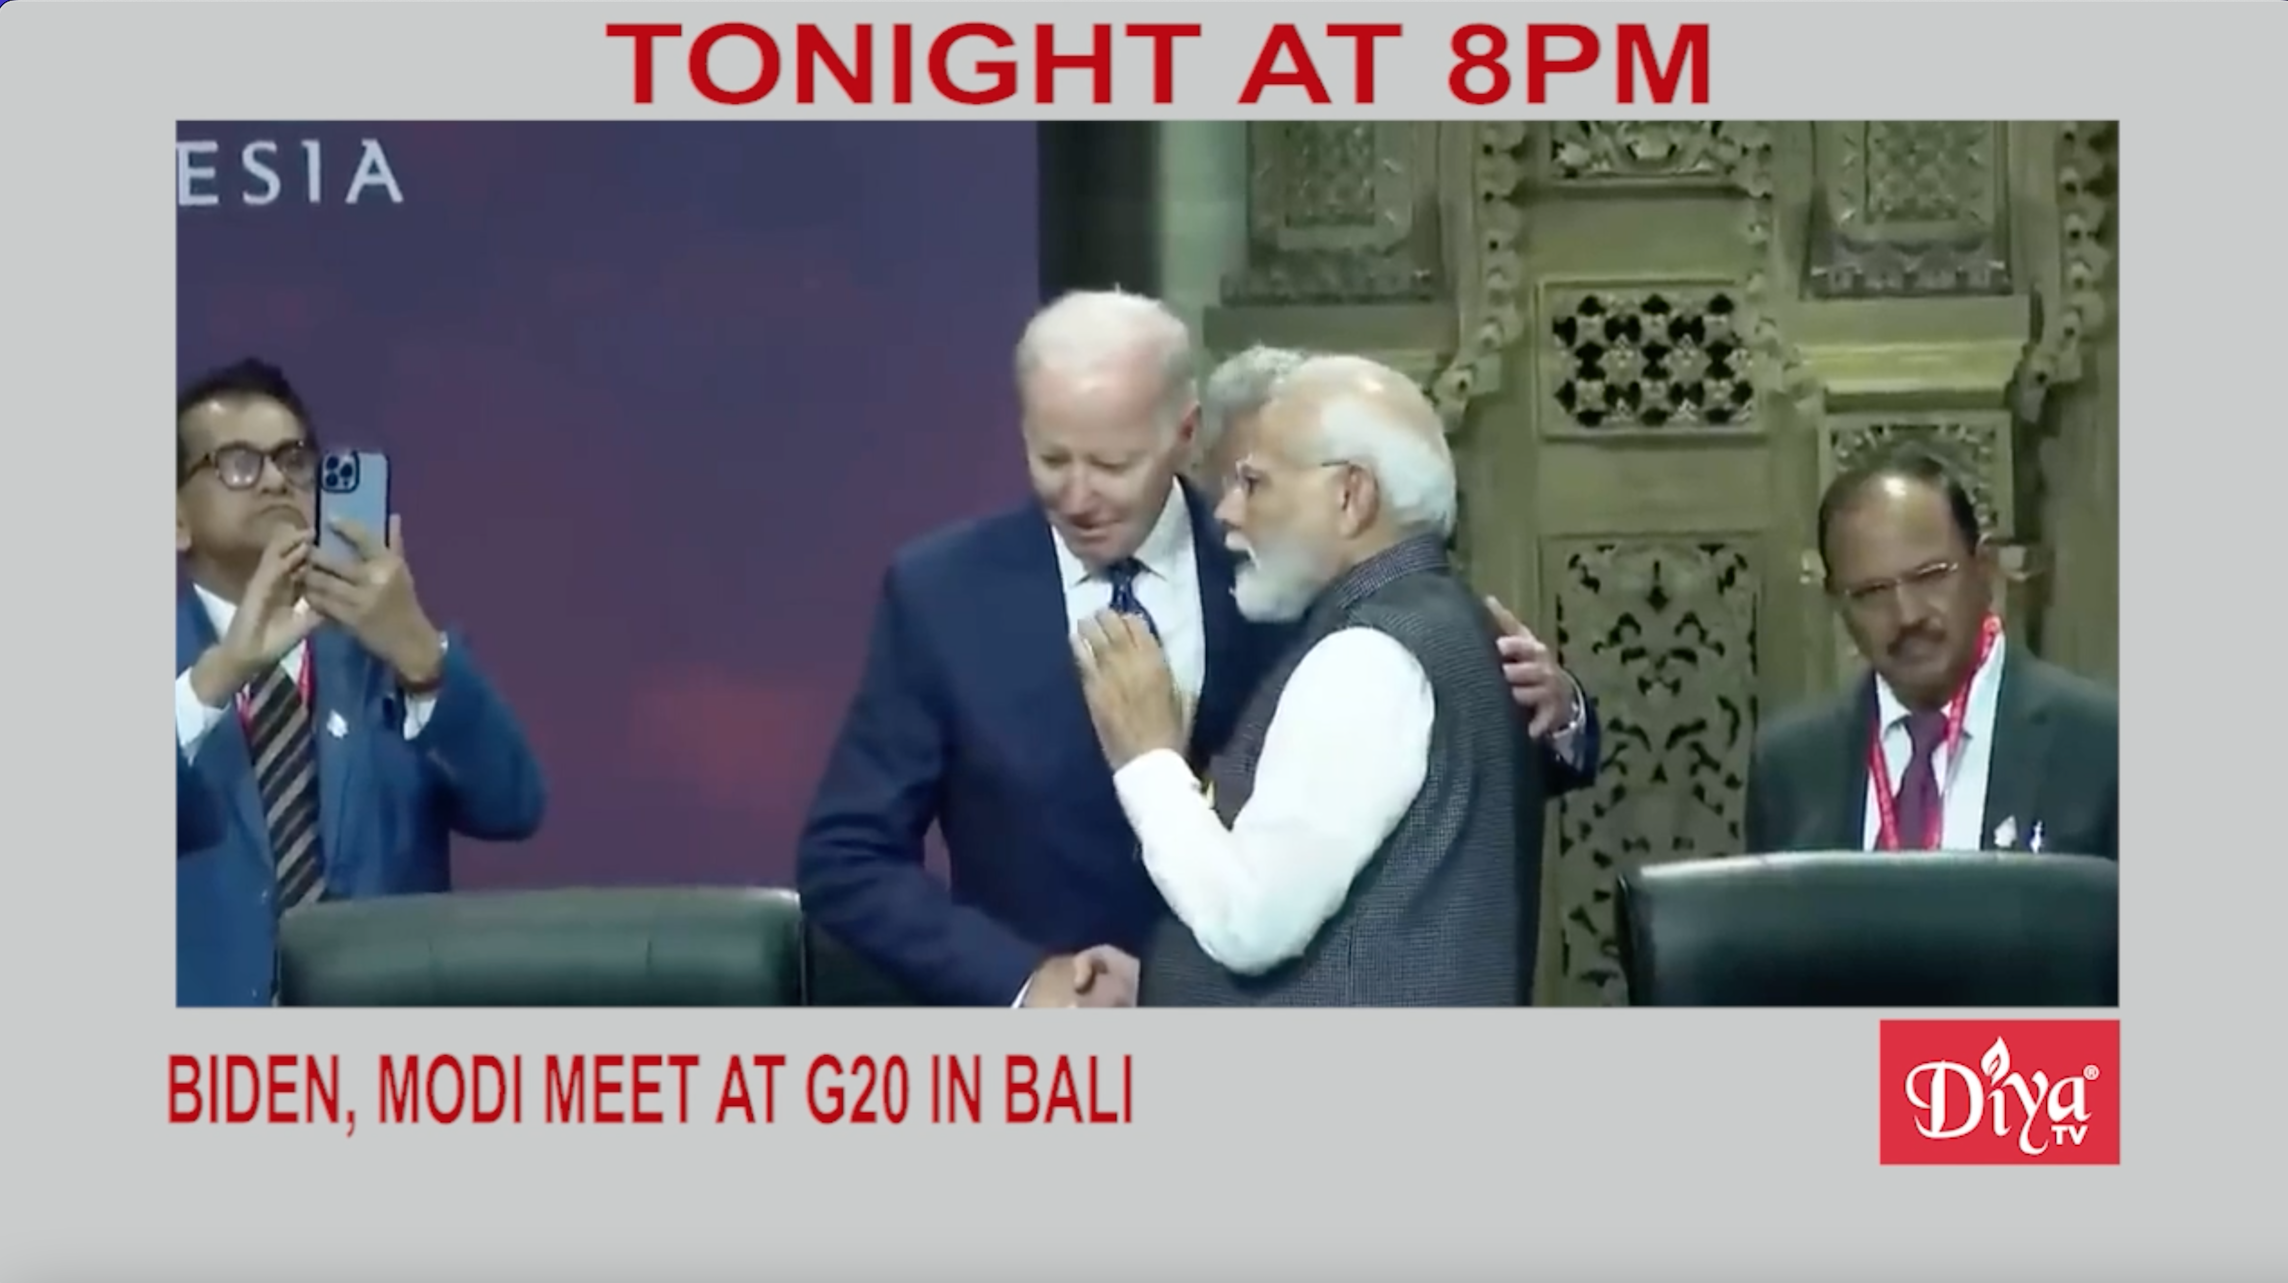 Biden & Modi meet at G20 in Bali